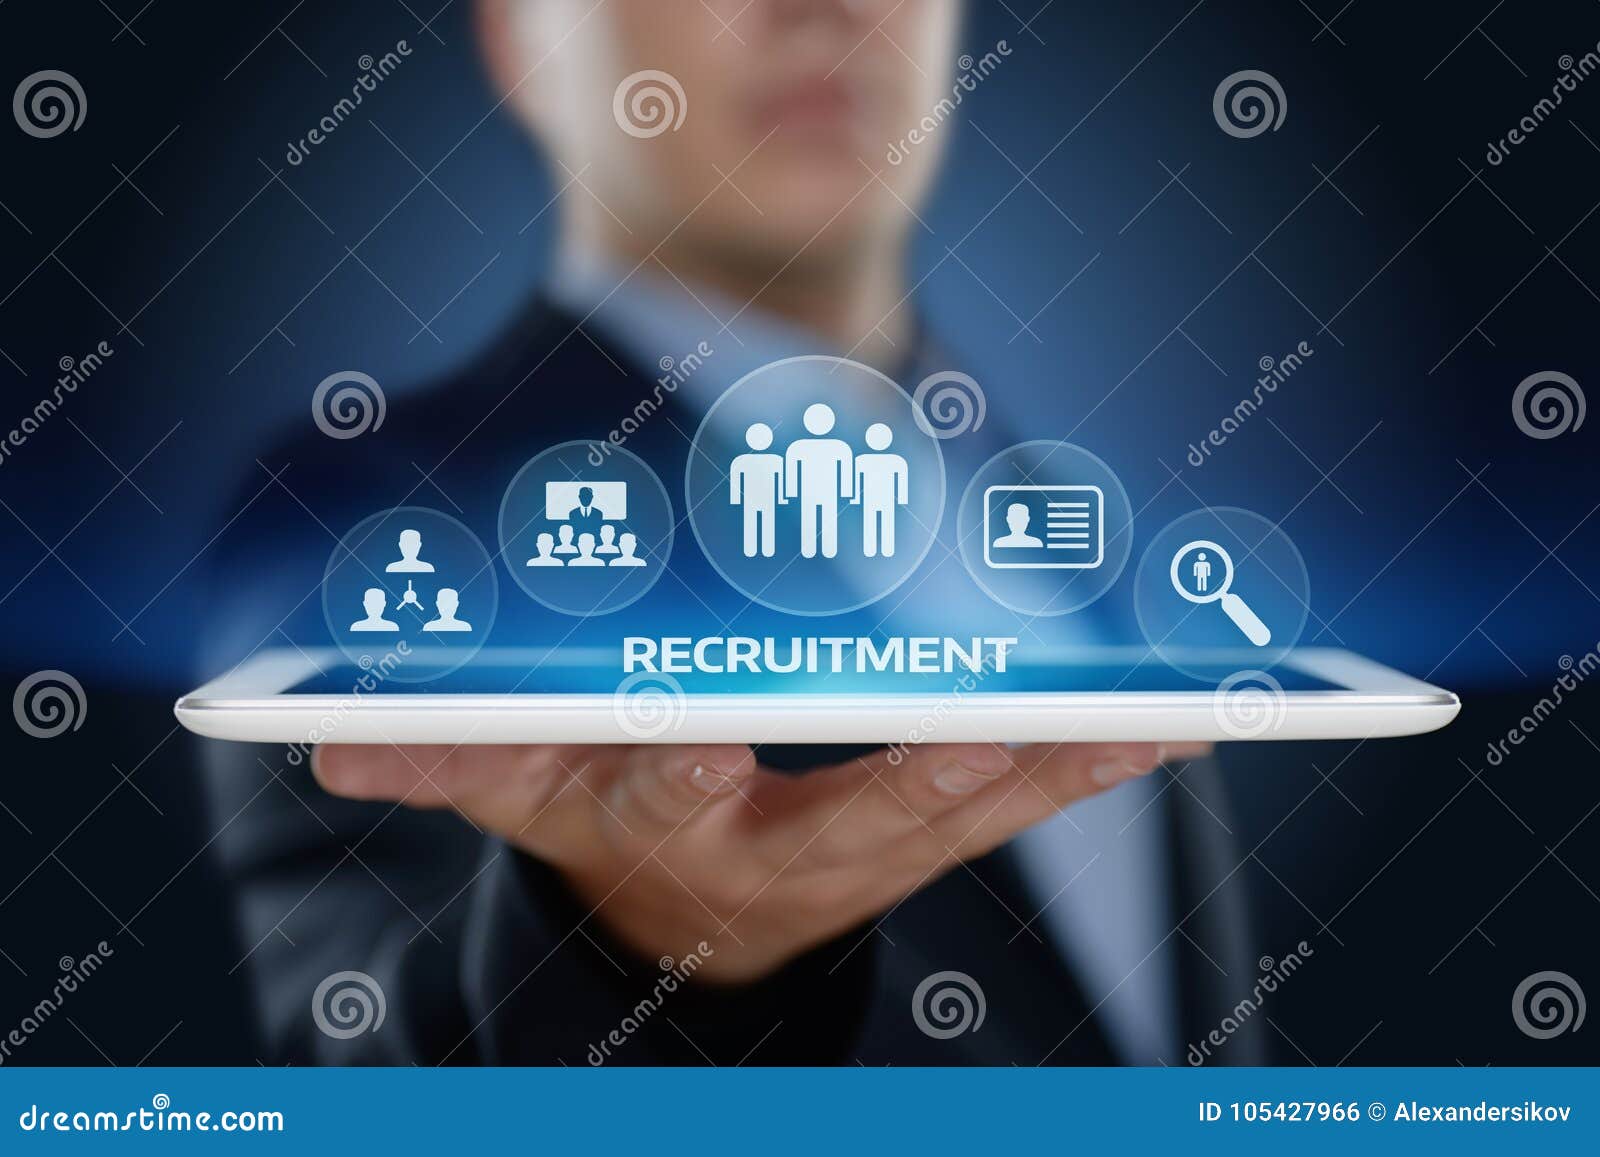 recruitment career employee interview business hr human resources concept